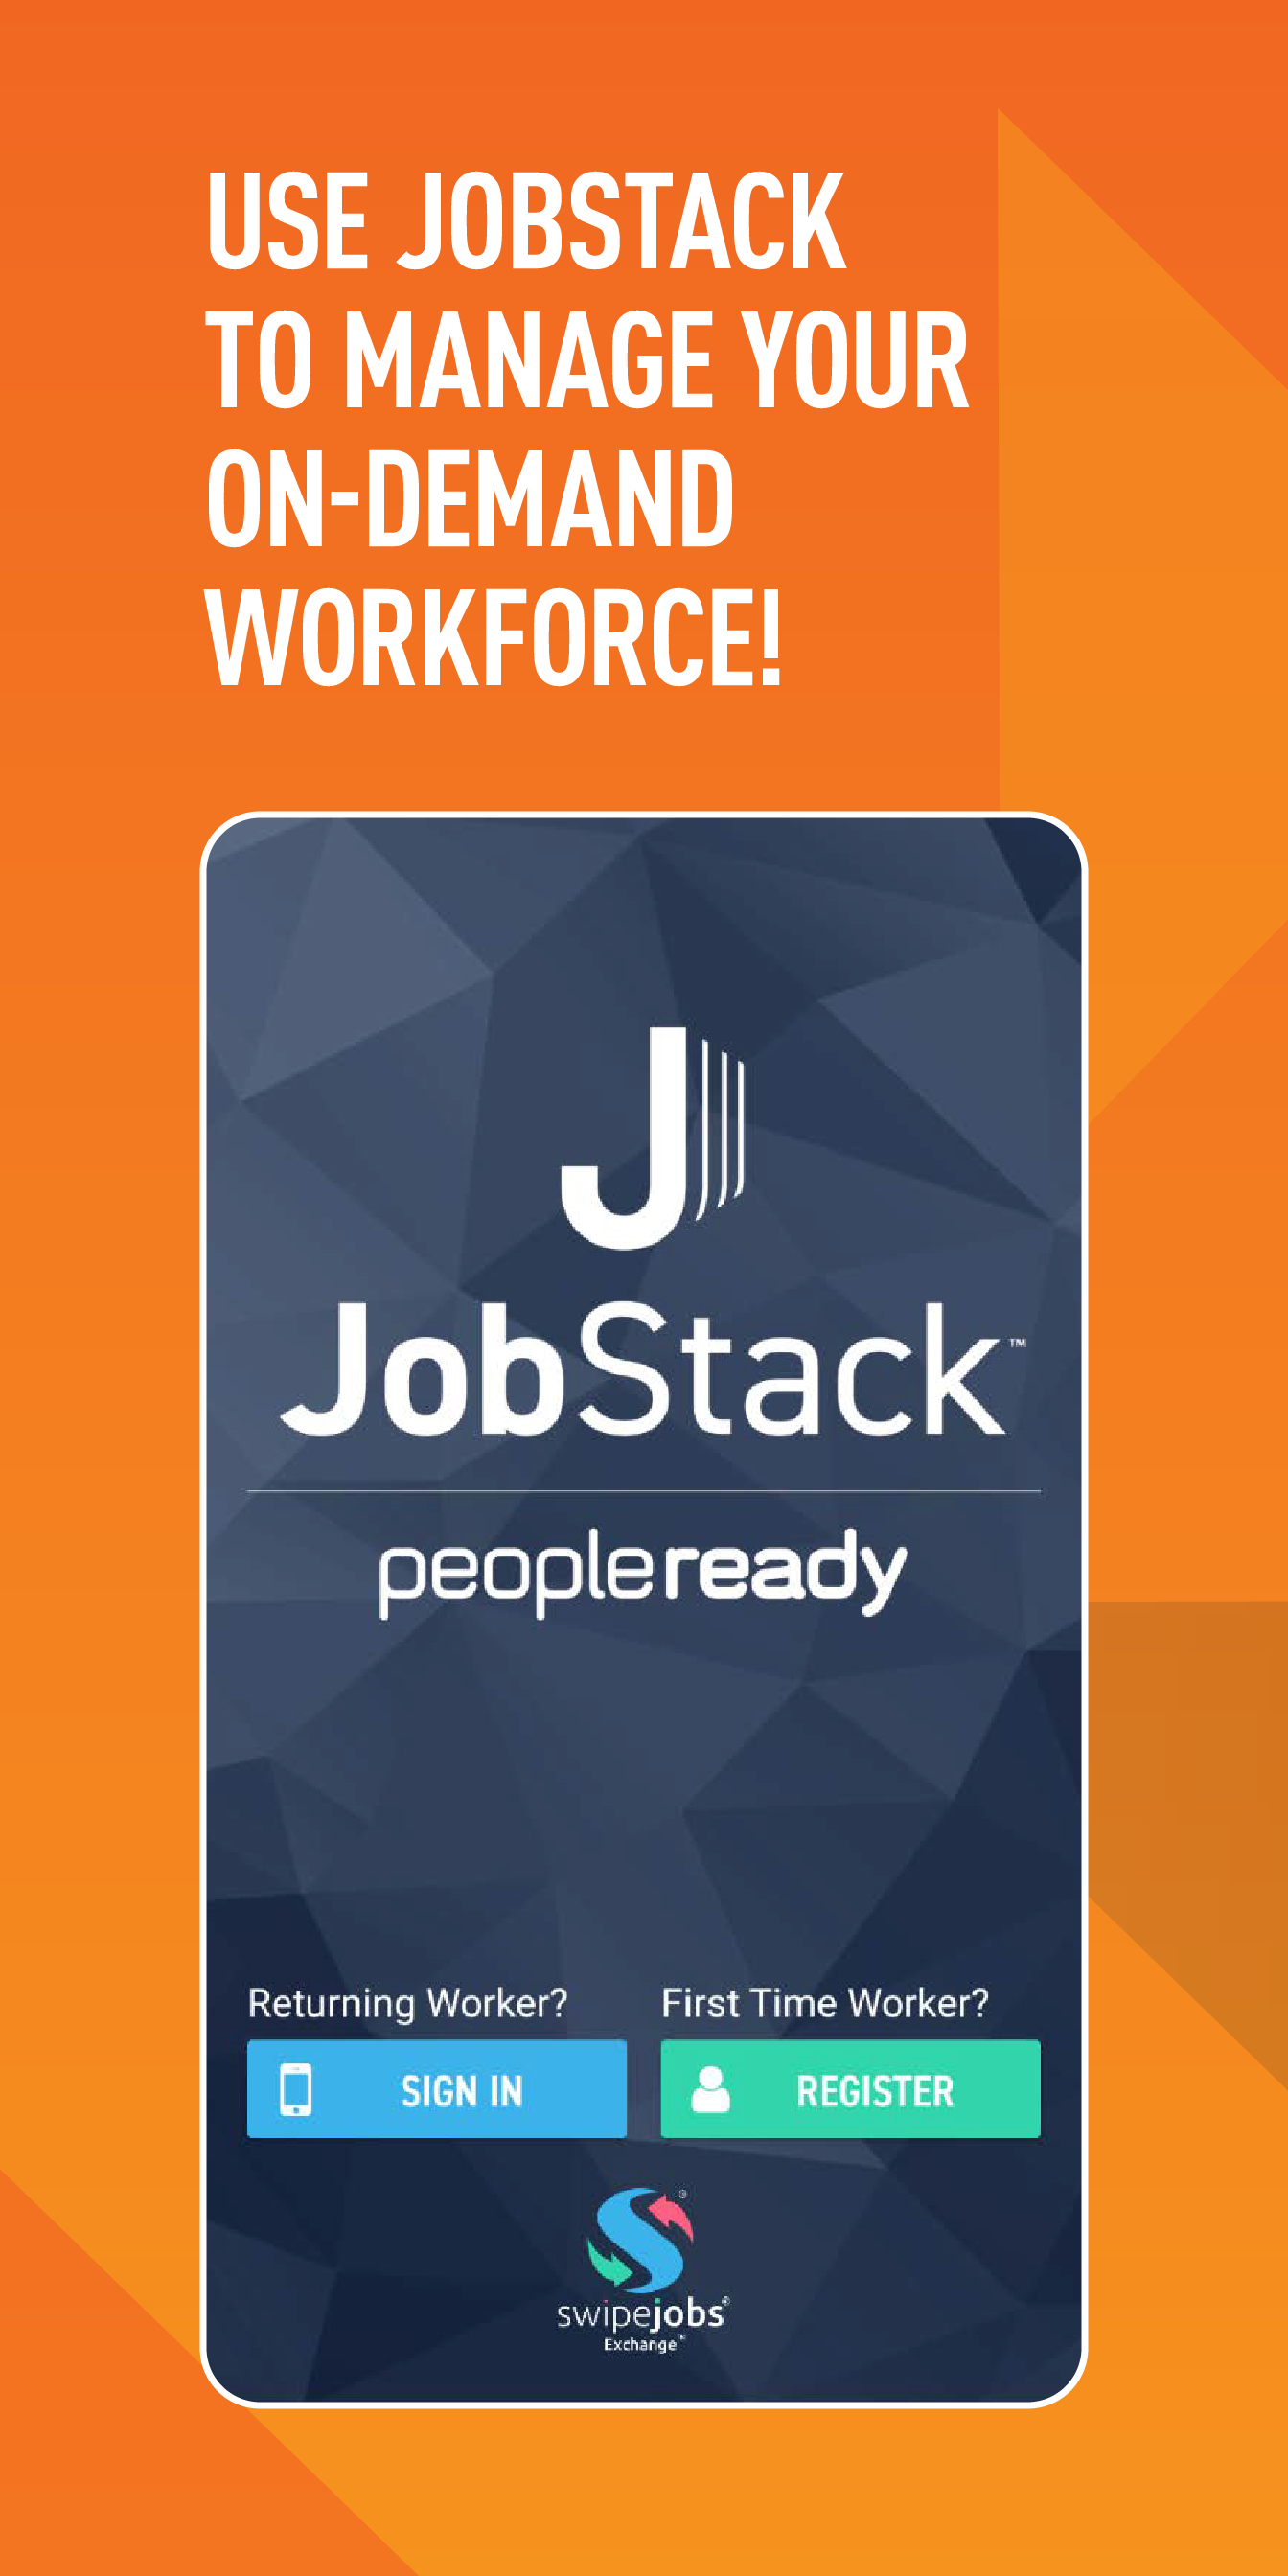 Vega Awards - PeopleReady's JobStack: Putting work within reach